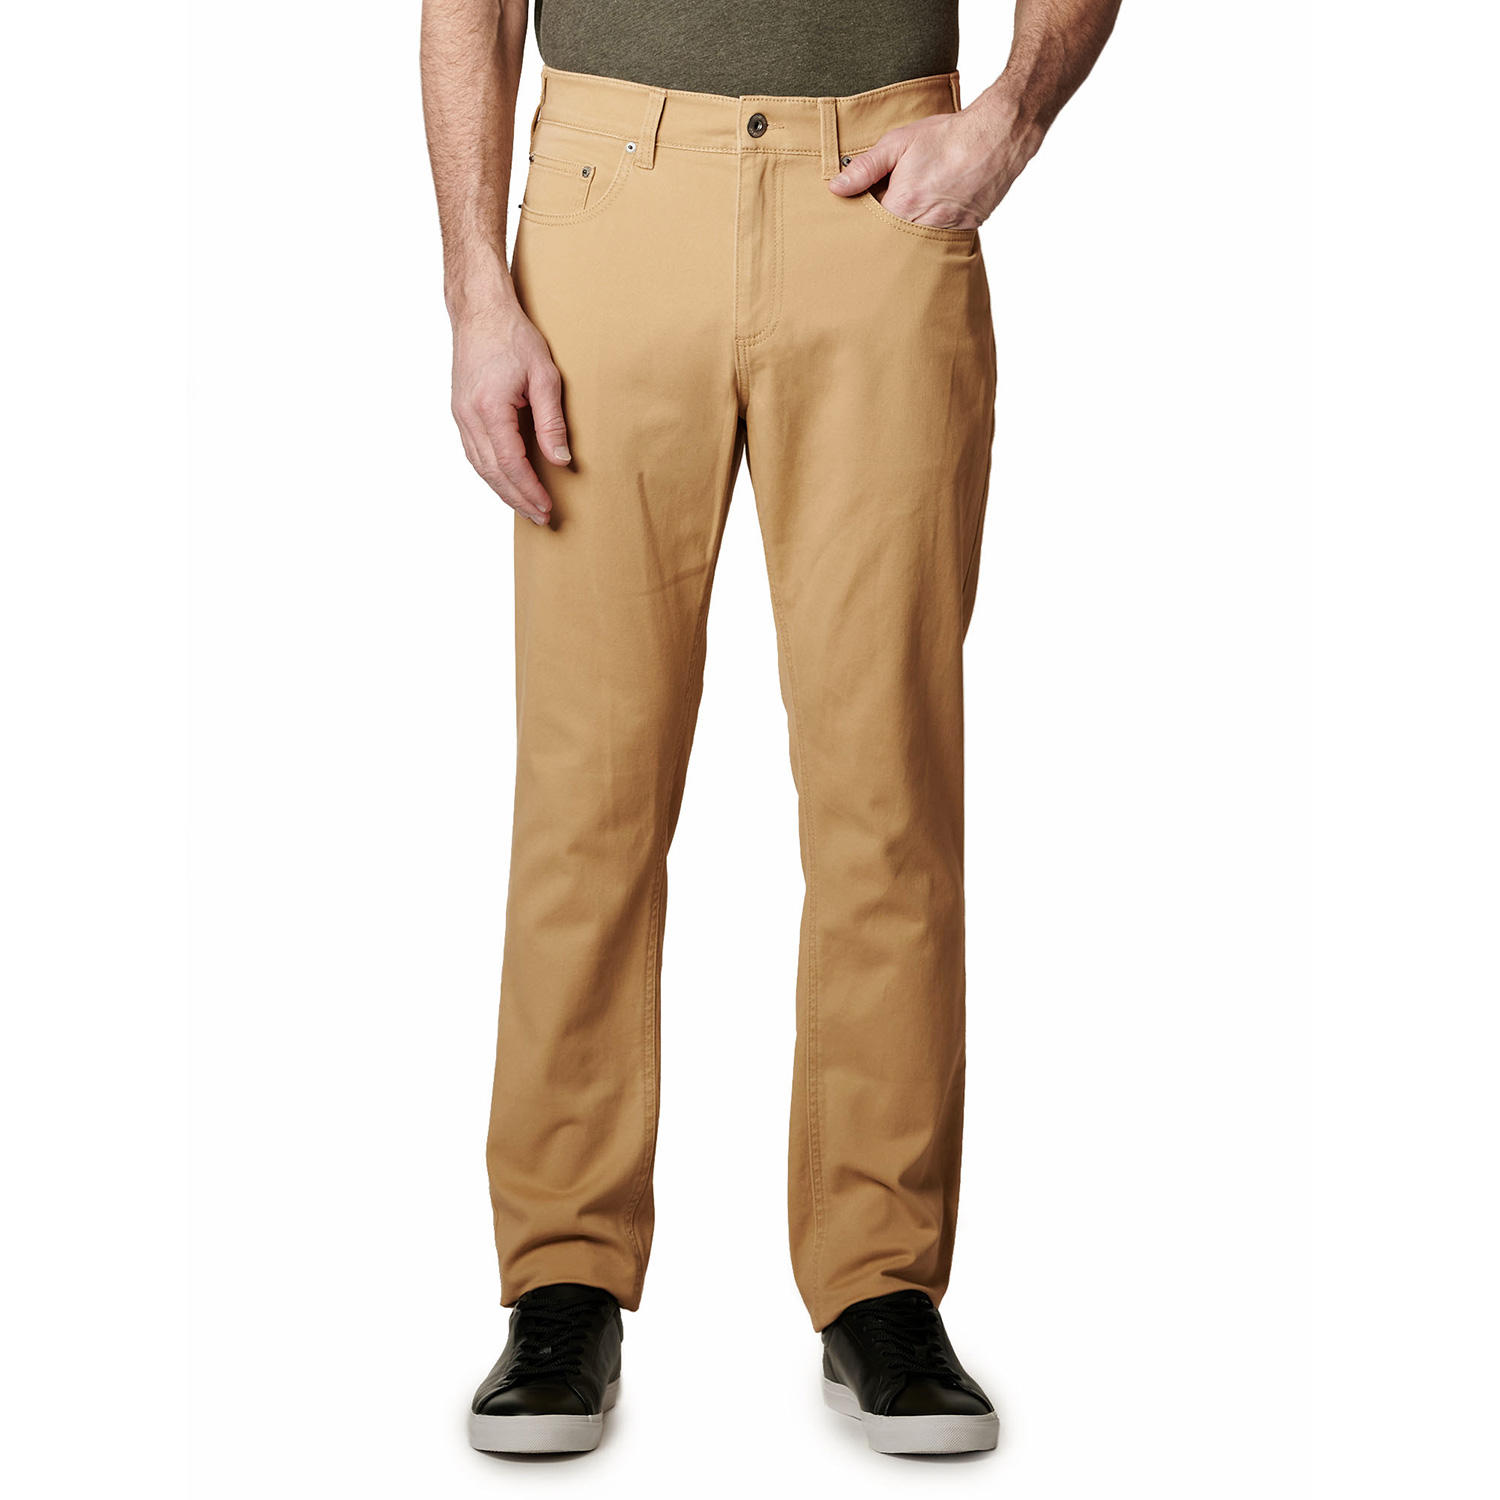 IRON Clothing PATRIOT Comfort Flex Waistband 5 Pocket Stretch Twill Pant - Desert Camel 38x32